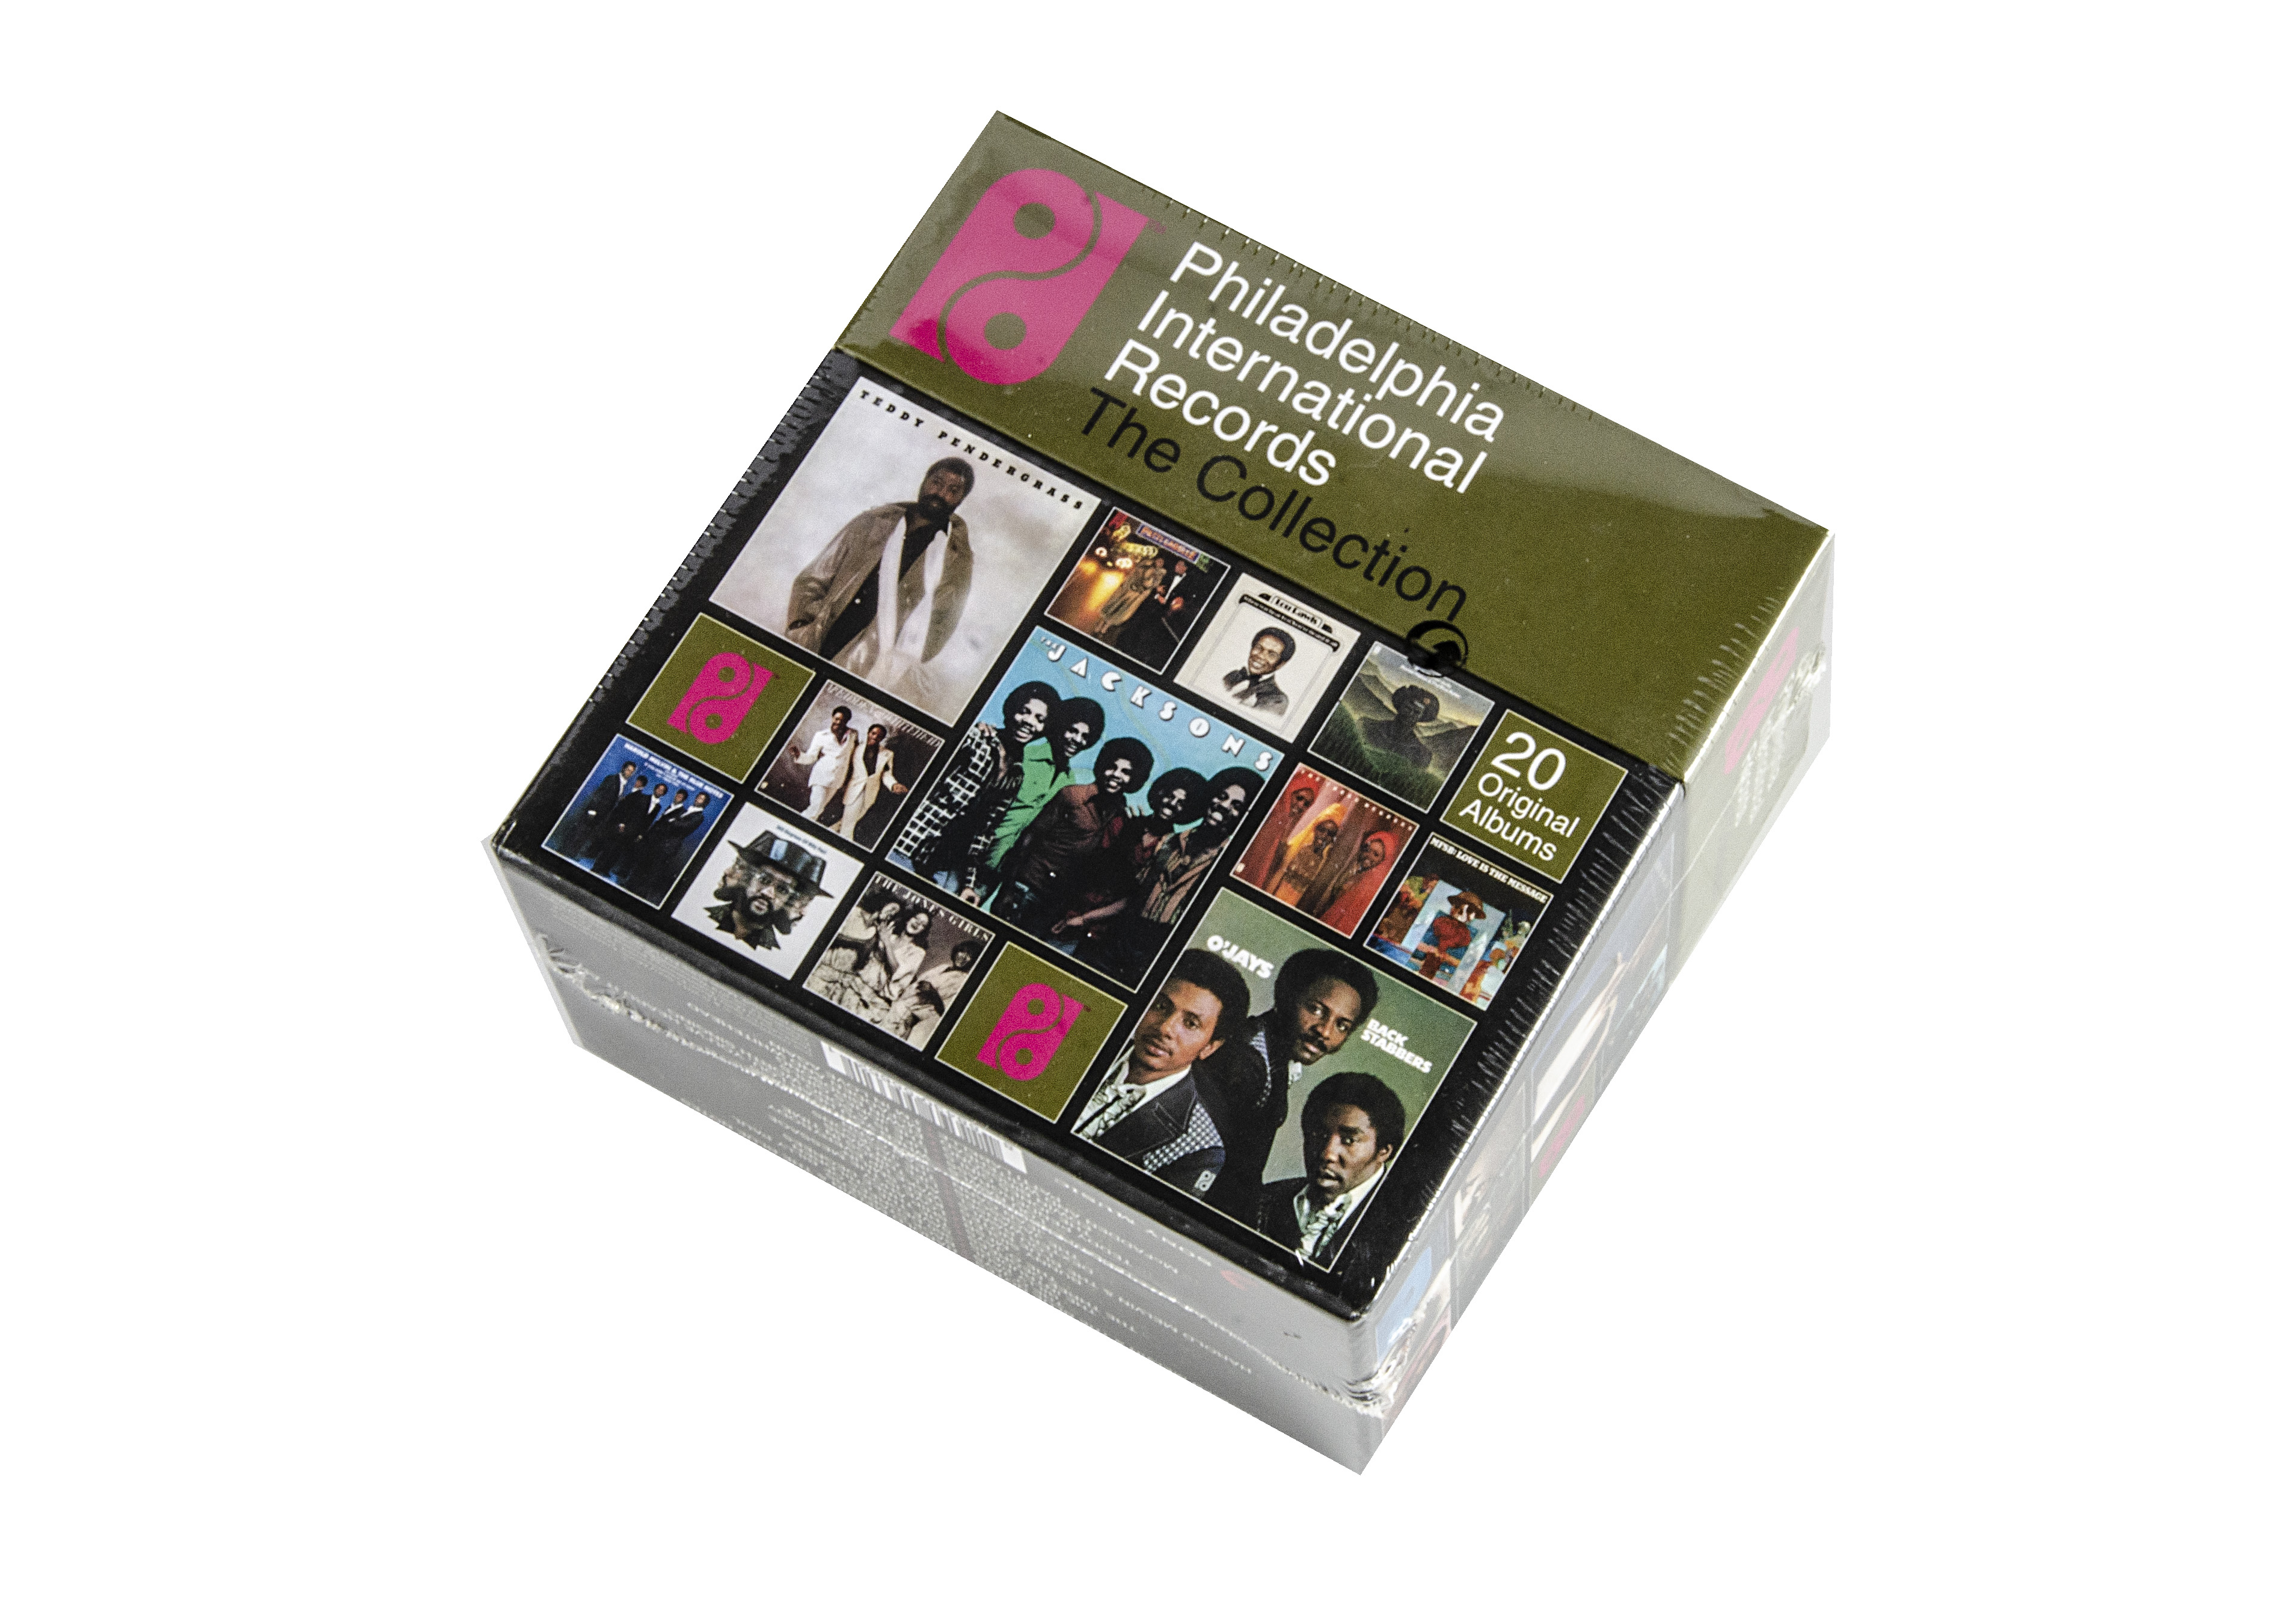 Philadelphia Records Box Set, Philadelphia International Records - The Collection 20 CD Box Set